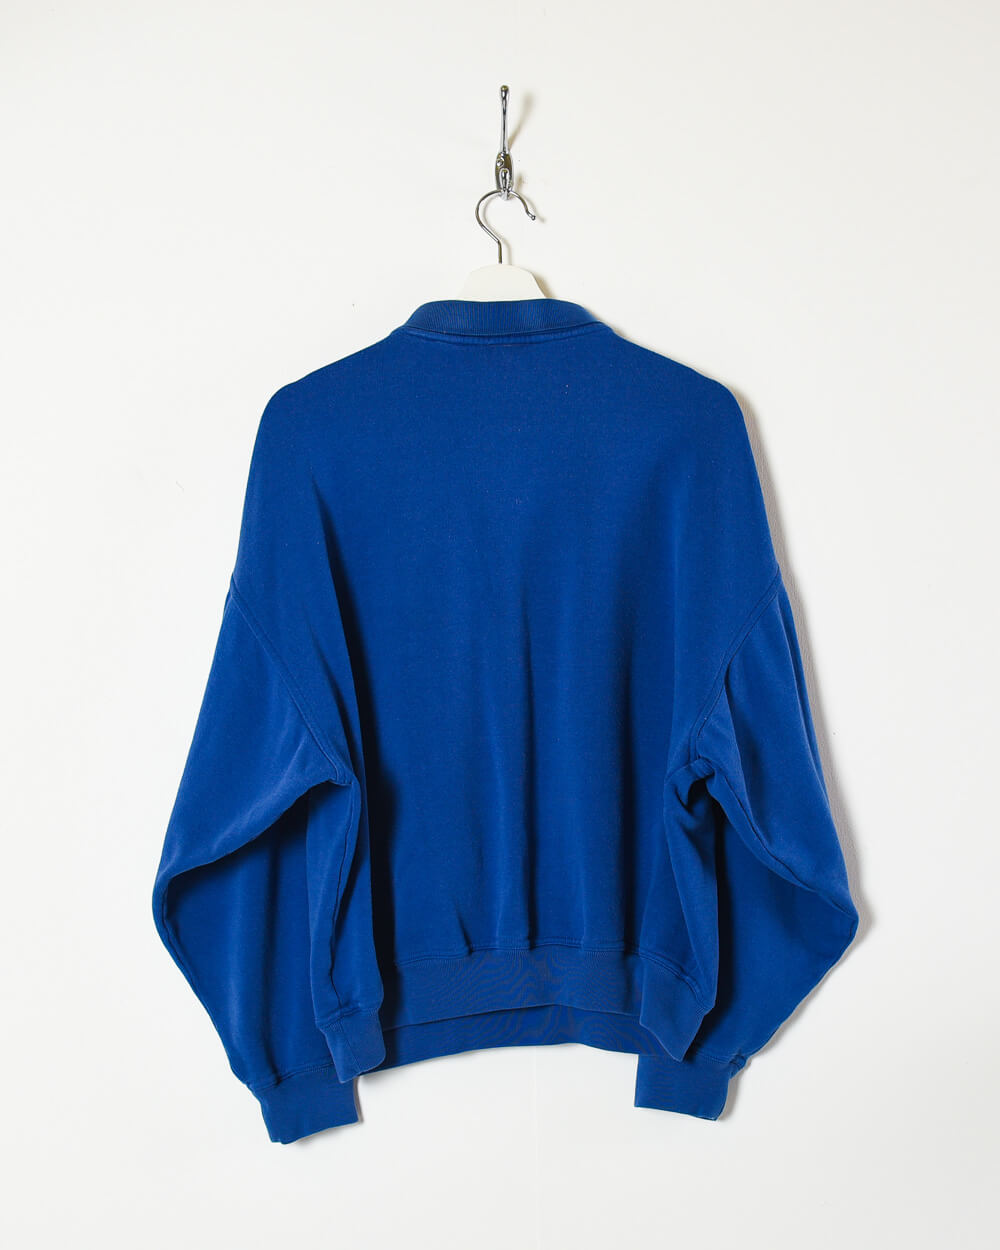 Blue Adidas Long Sleeved Polo Shirt - Medium